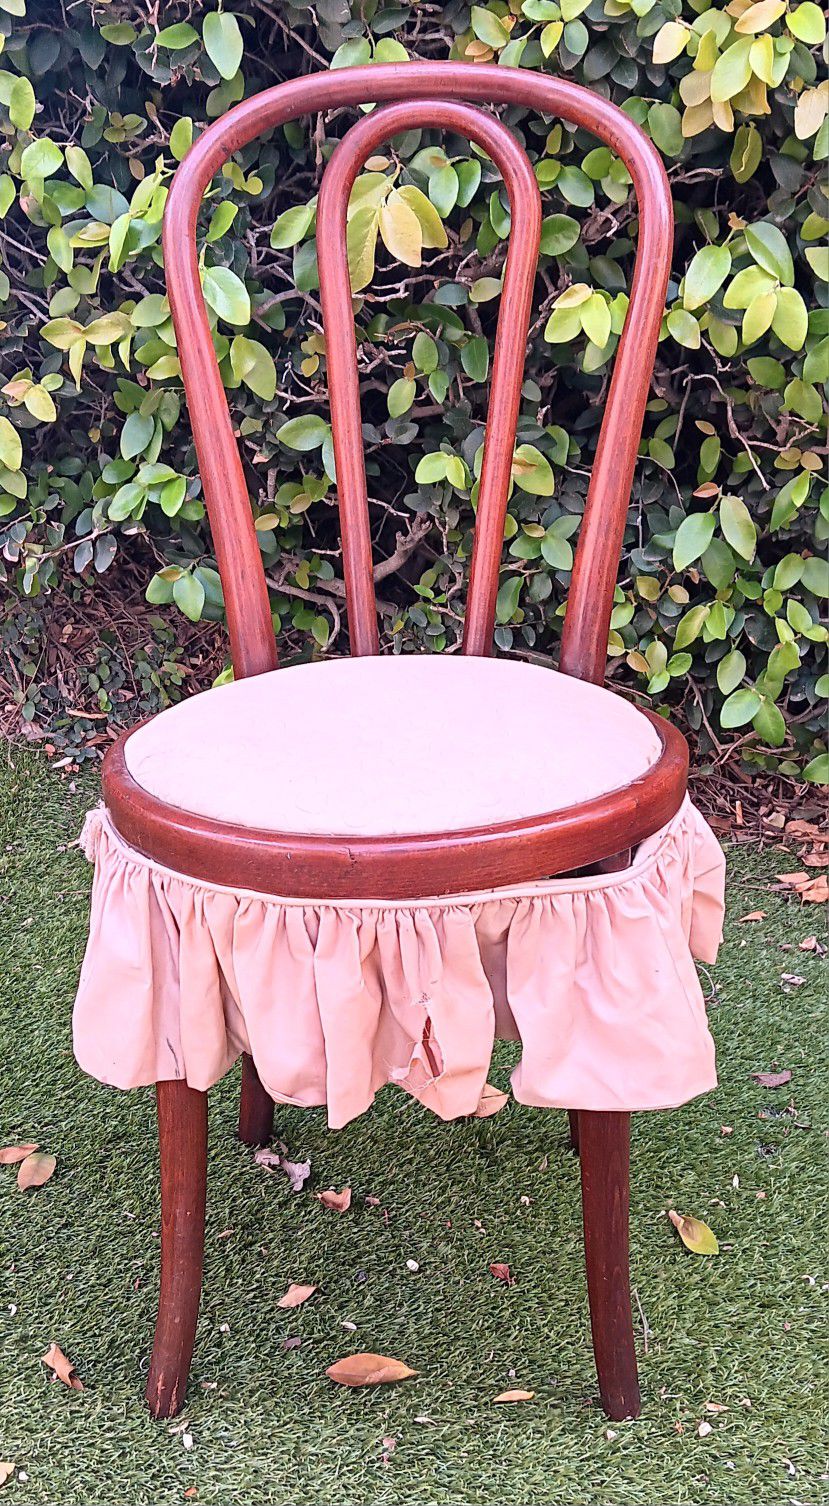 Brentwood Vintage Chair.